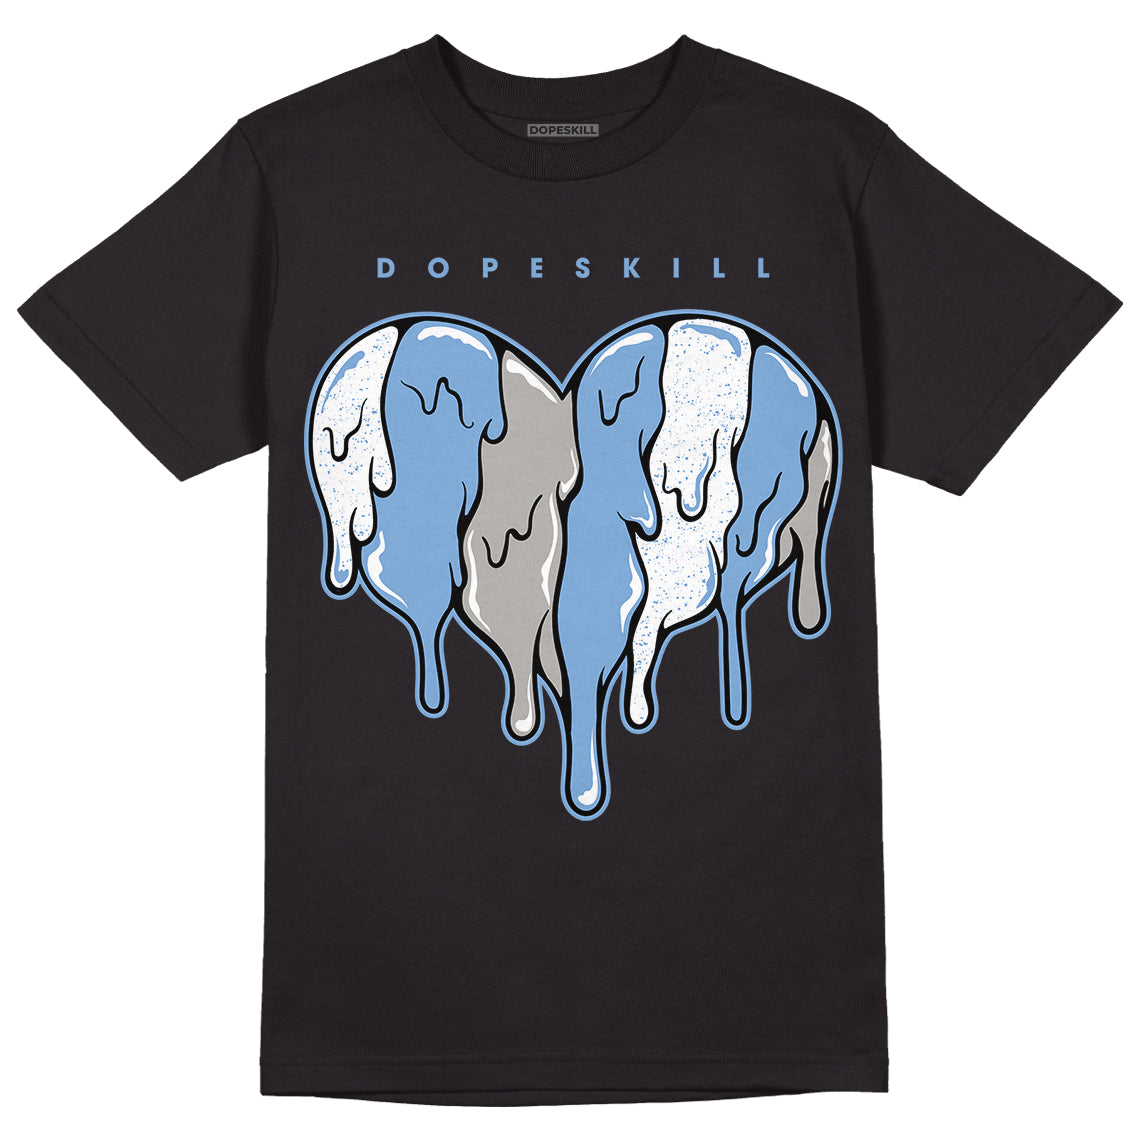 Jordan 5 Retro University Blue DopeSkill T-Shirt Slime Drip Heart Graphic Streetwear - Black